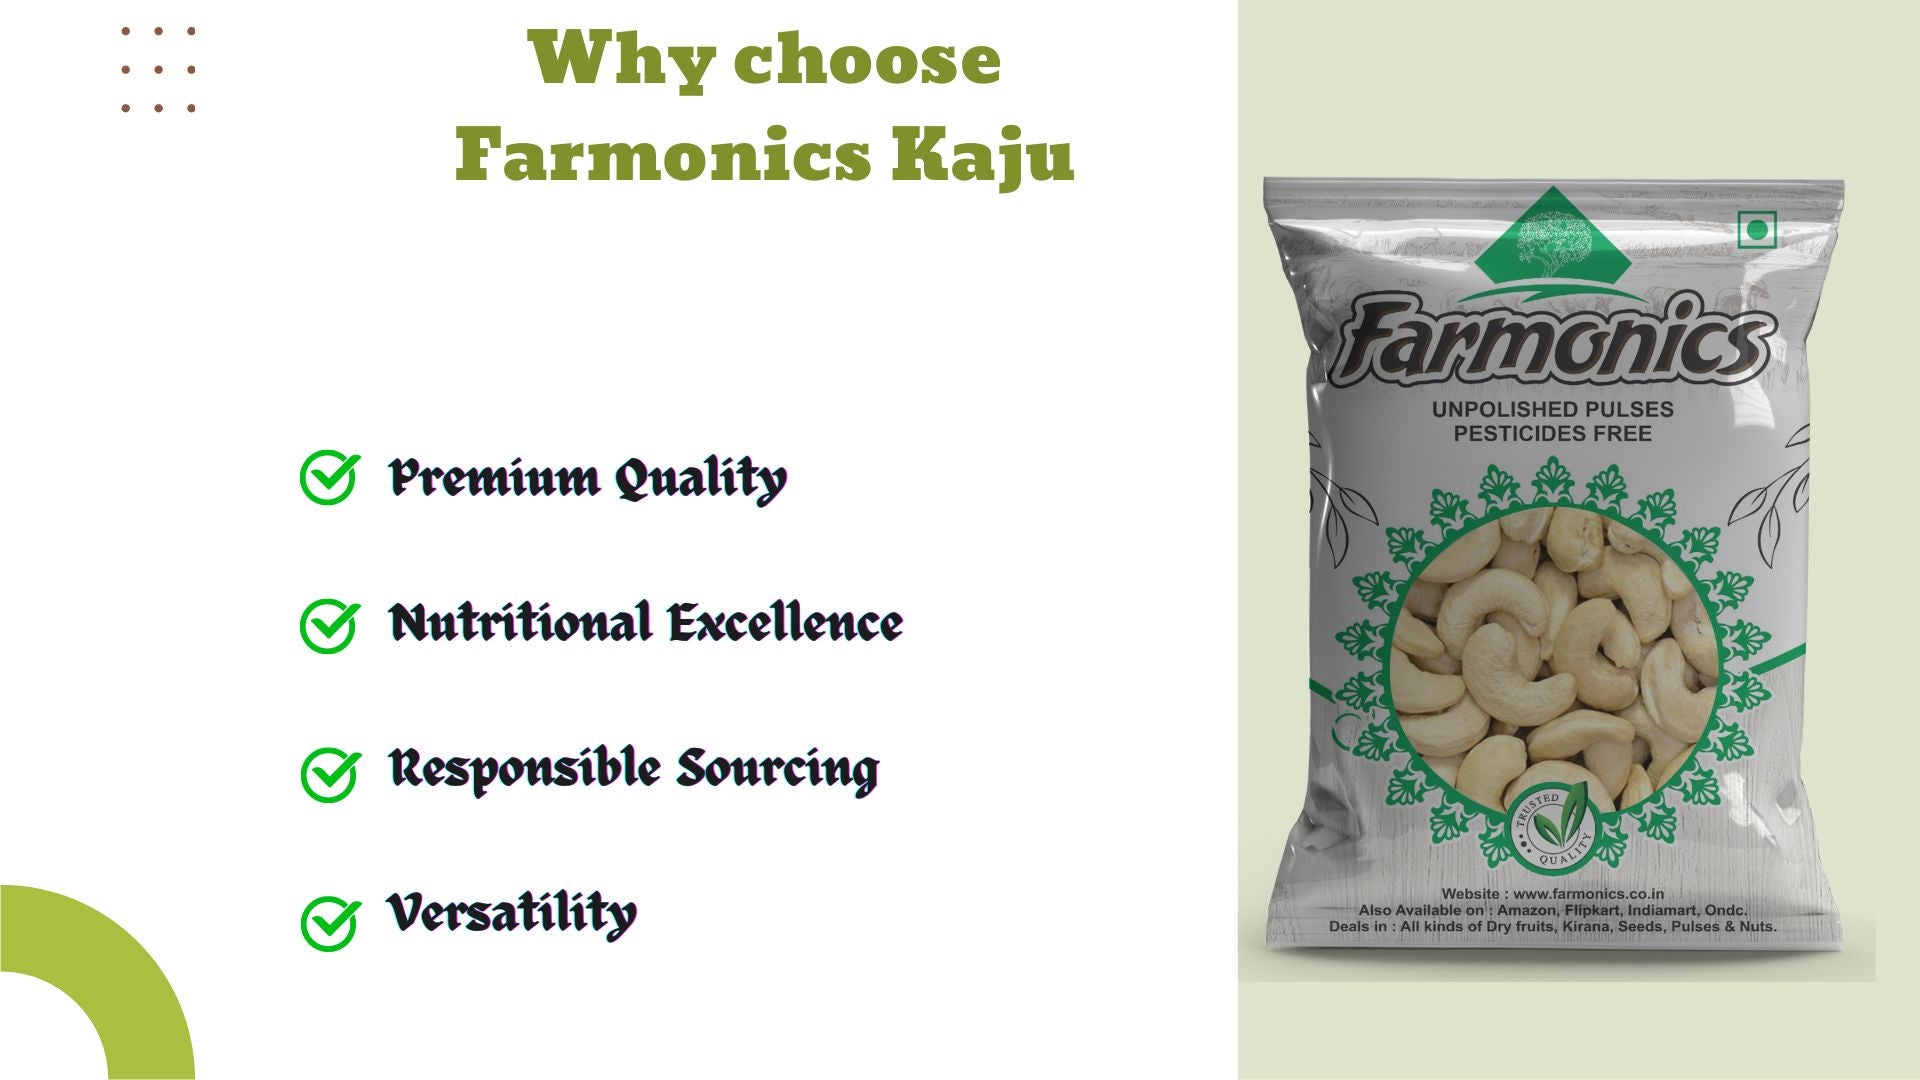 Some of the reasons why you should choose farmonics best quality kaju/cashew